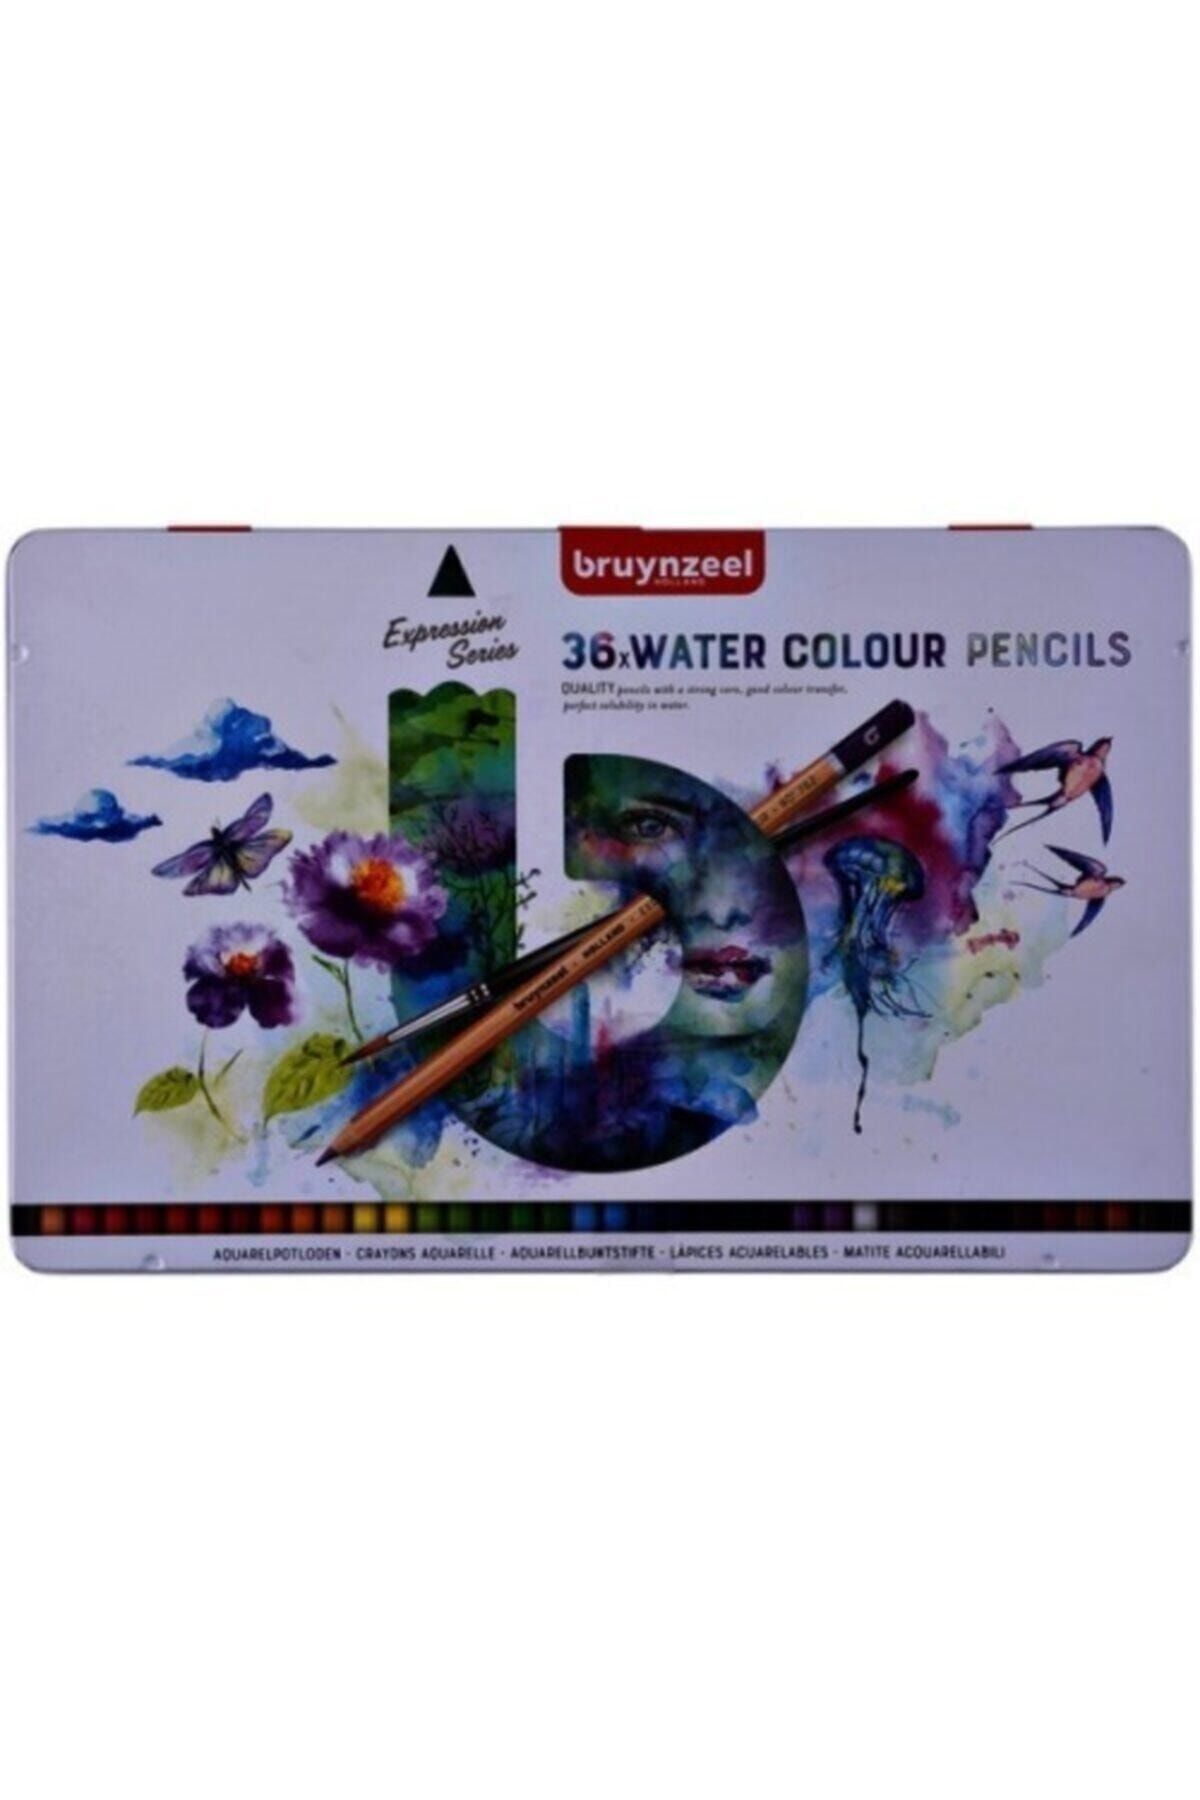 Bruynzeel Holland 36x Water Colour Pencils (36 RENK KURU SULU BOYA KALEMİ)